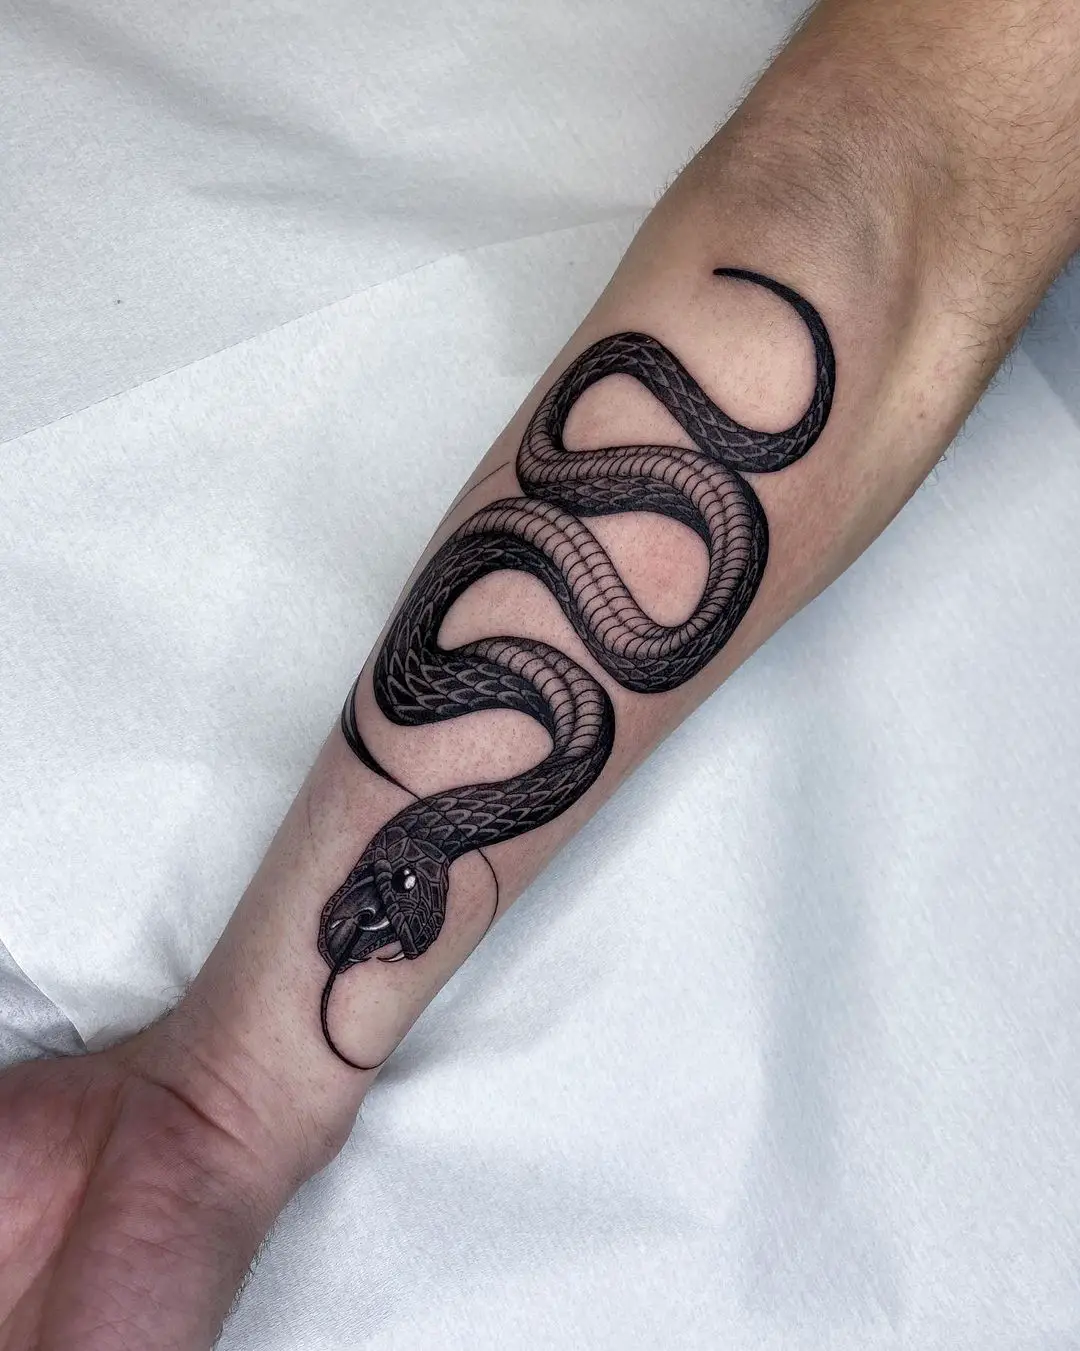 Realistic snake tattoo by corvus ntc